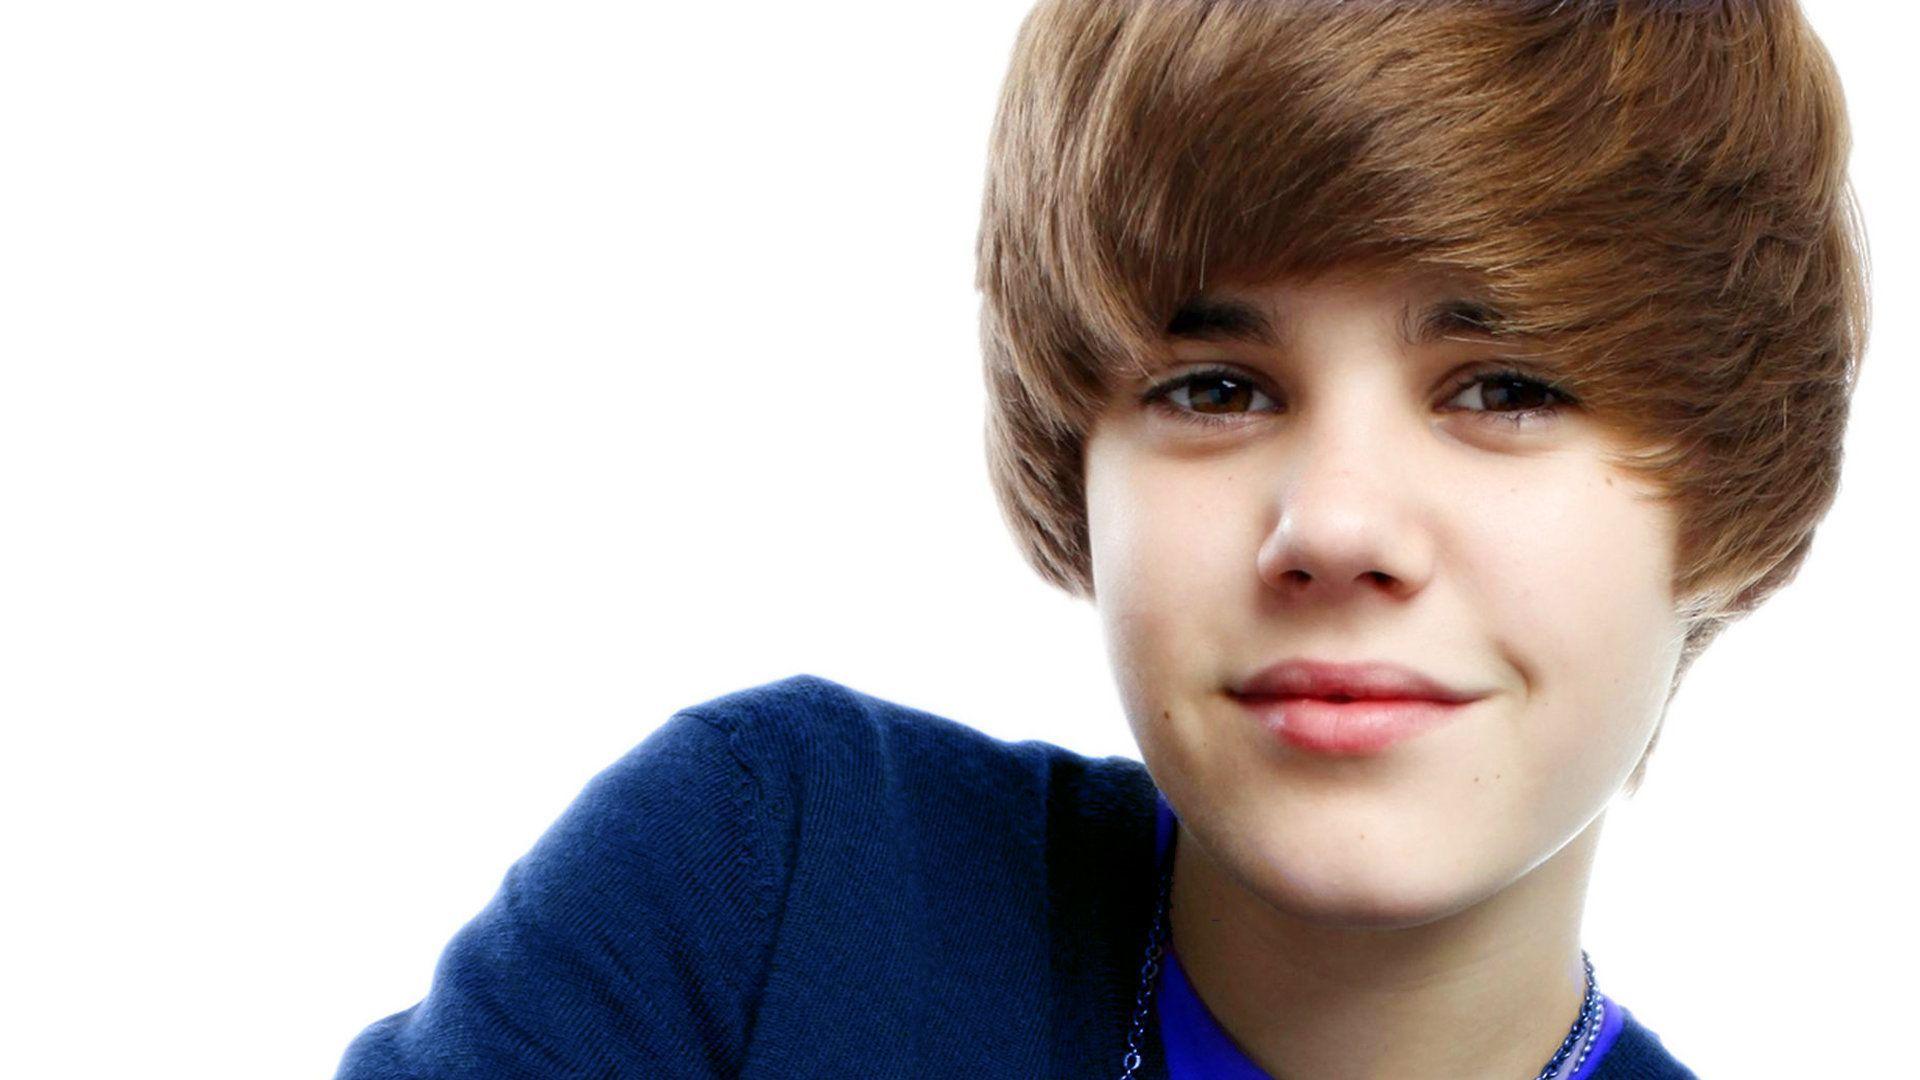 Justin Bieber Wallpaper, HD Creative Justin Bieber Wallpaper